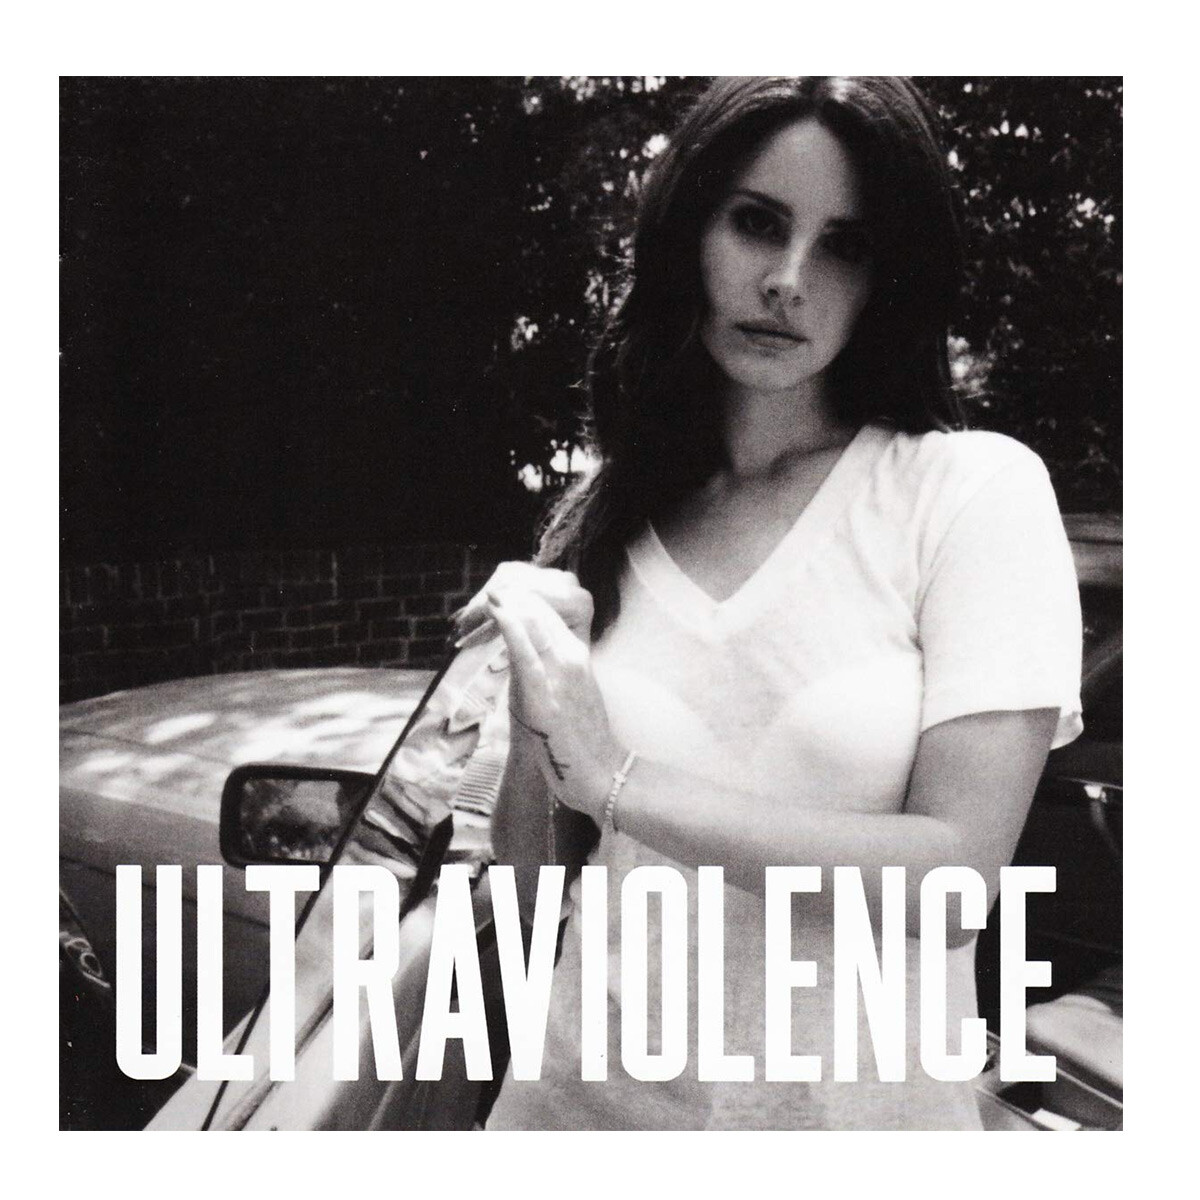 Del Rey Lana-ultraviolence - Cd 